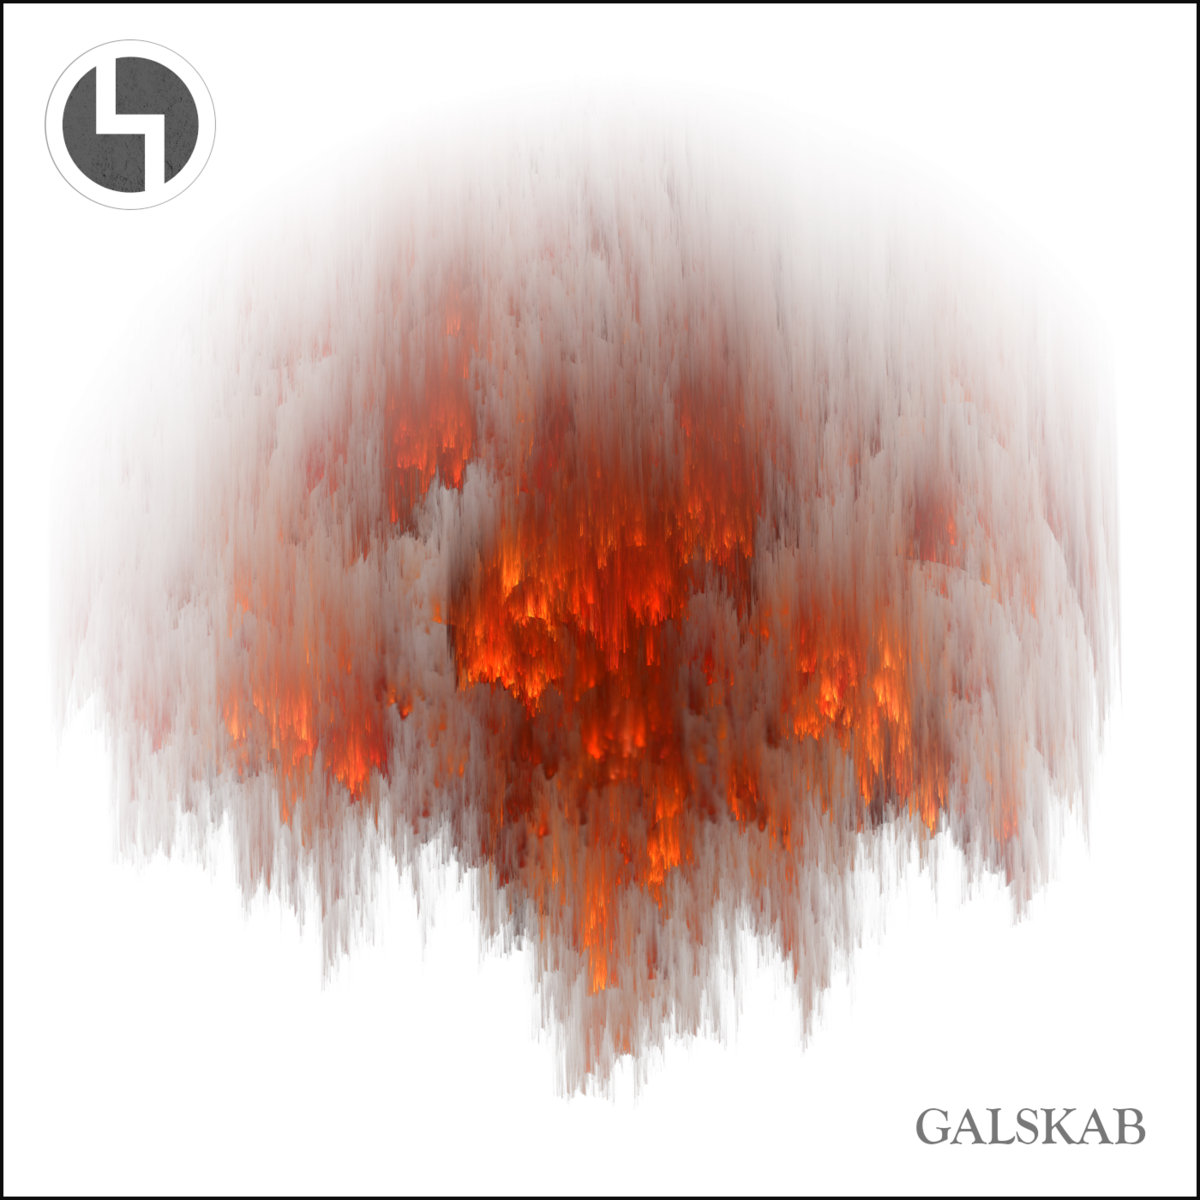 SKAMBIDT – GALSKAB, new release